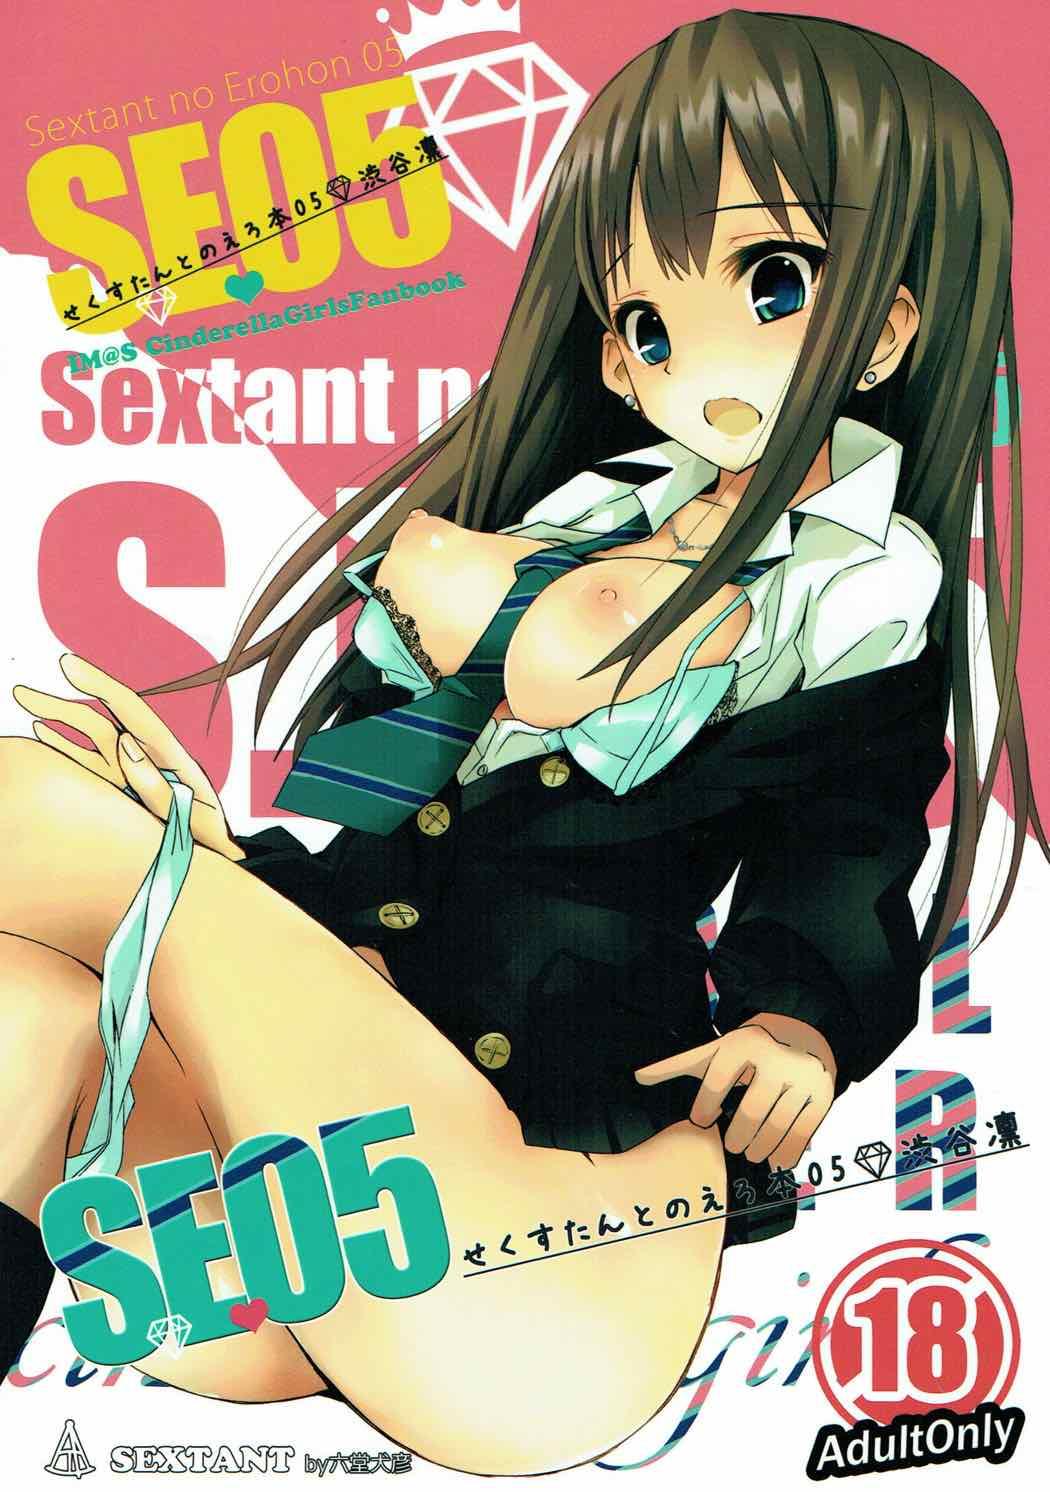 S.E.05 Sextant no Ero Hon Shibuya Rin 0